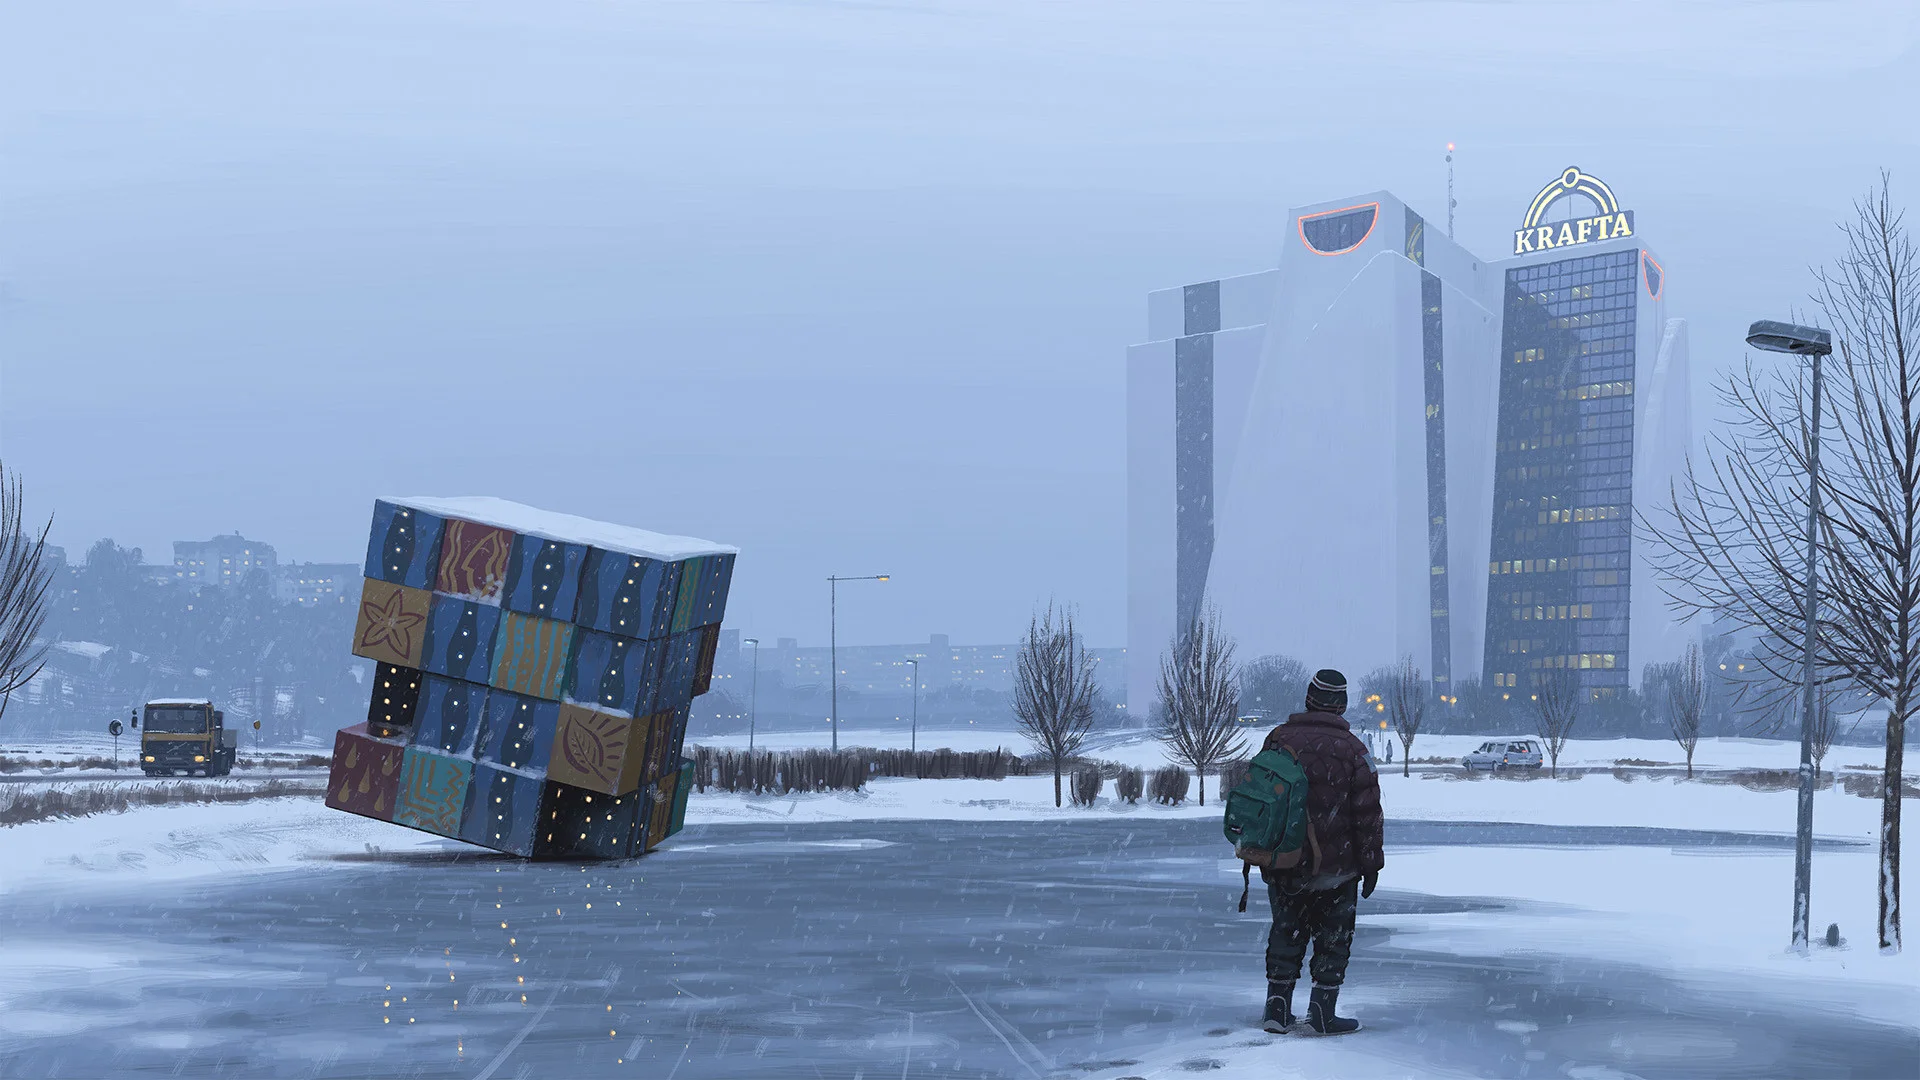 Krafta building HQ, boy in snow city, cube, Swedish atmospheric wallpaper  illustration by